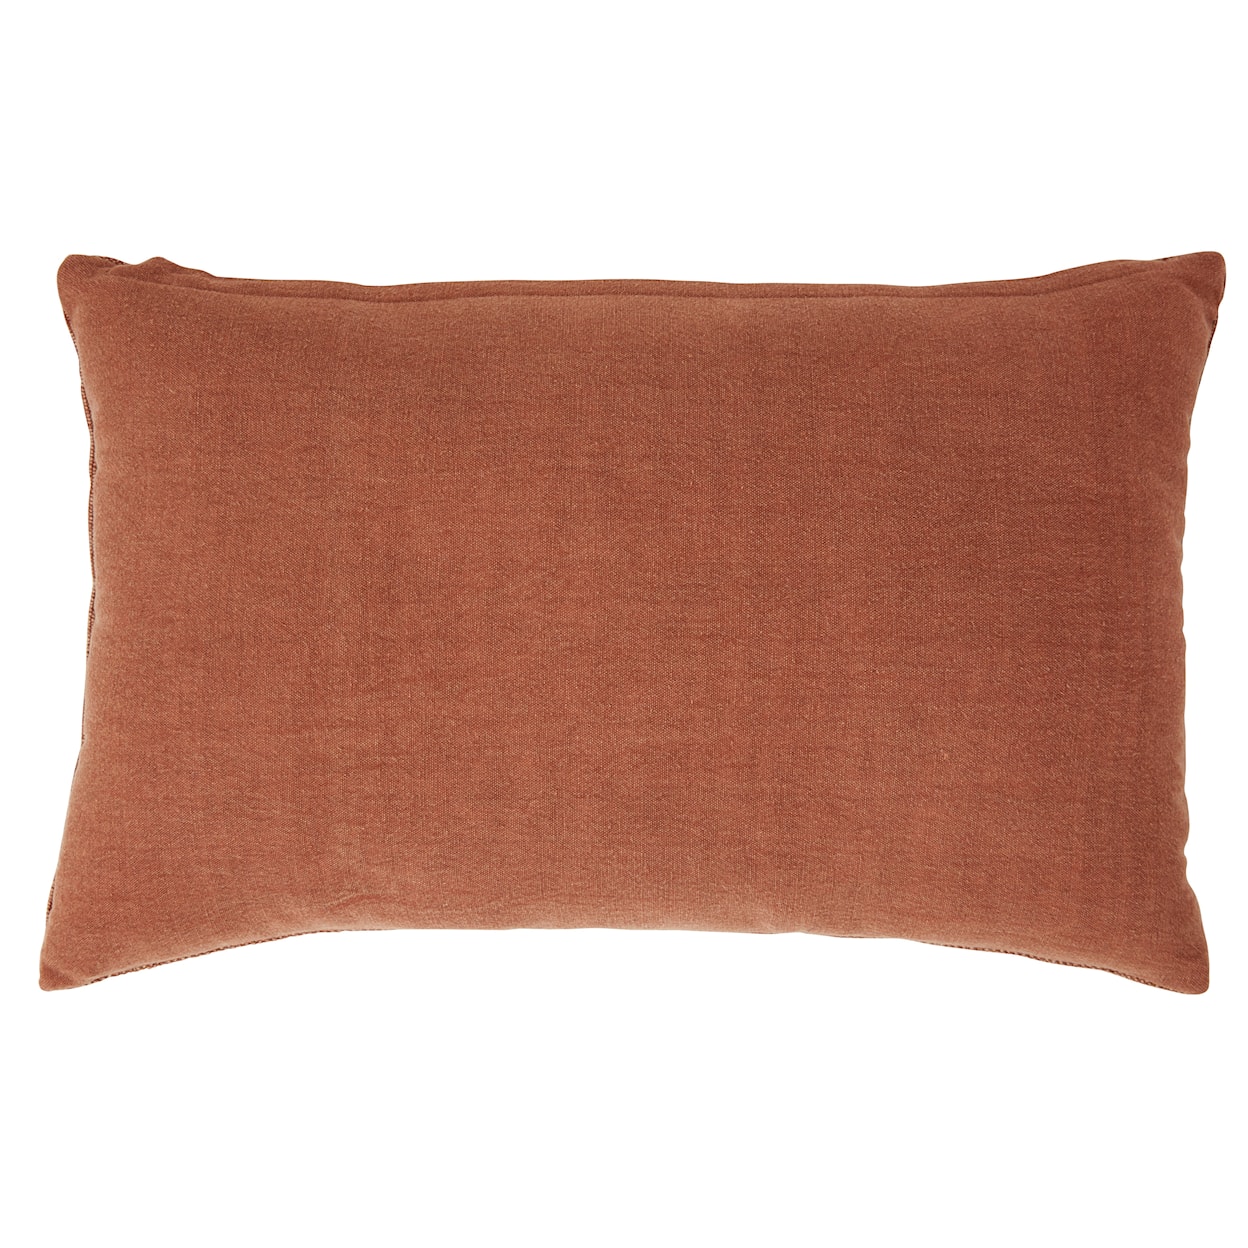 Benchcraft Pillows Dovinton Pillow